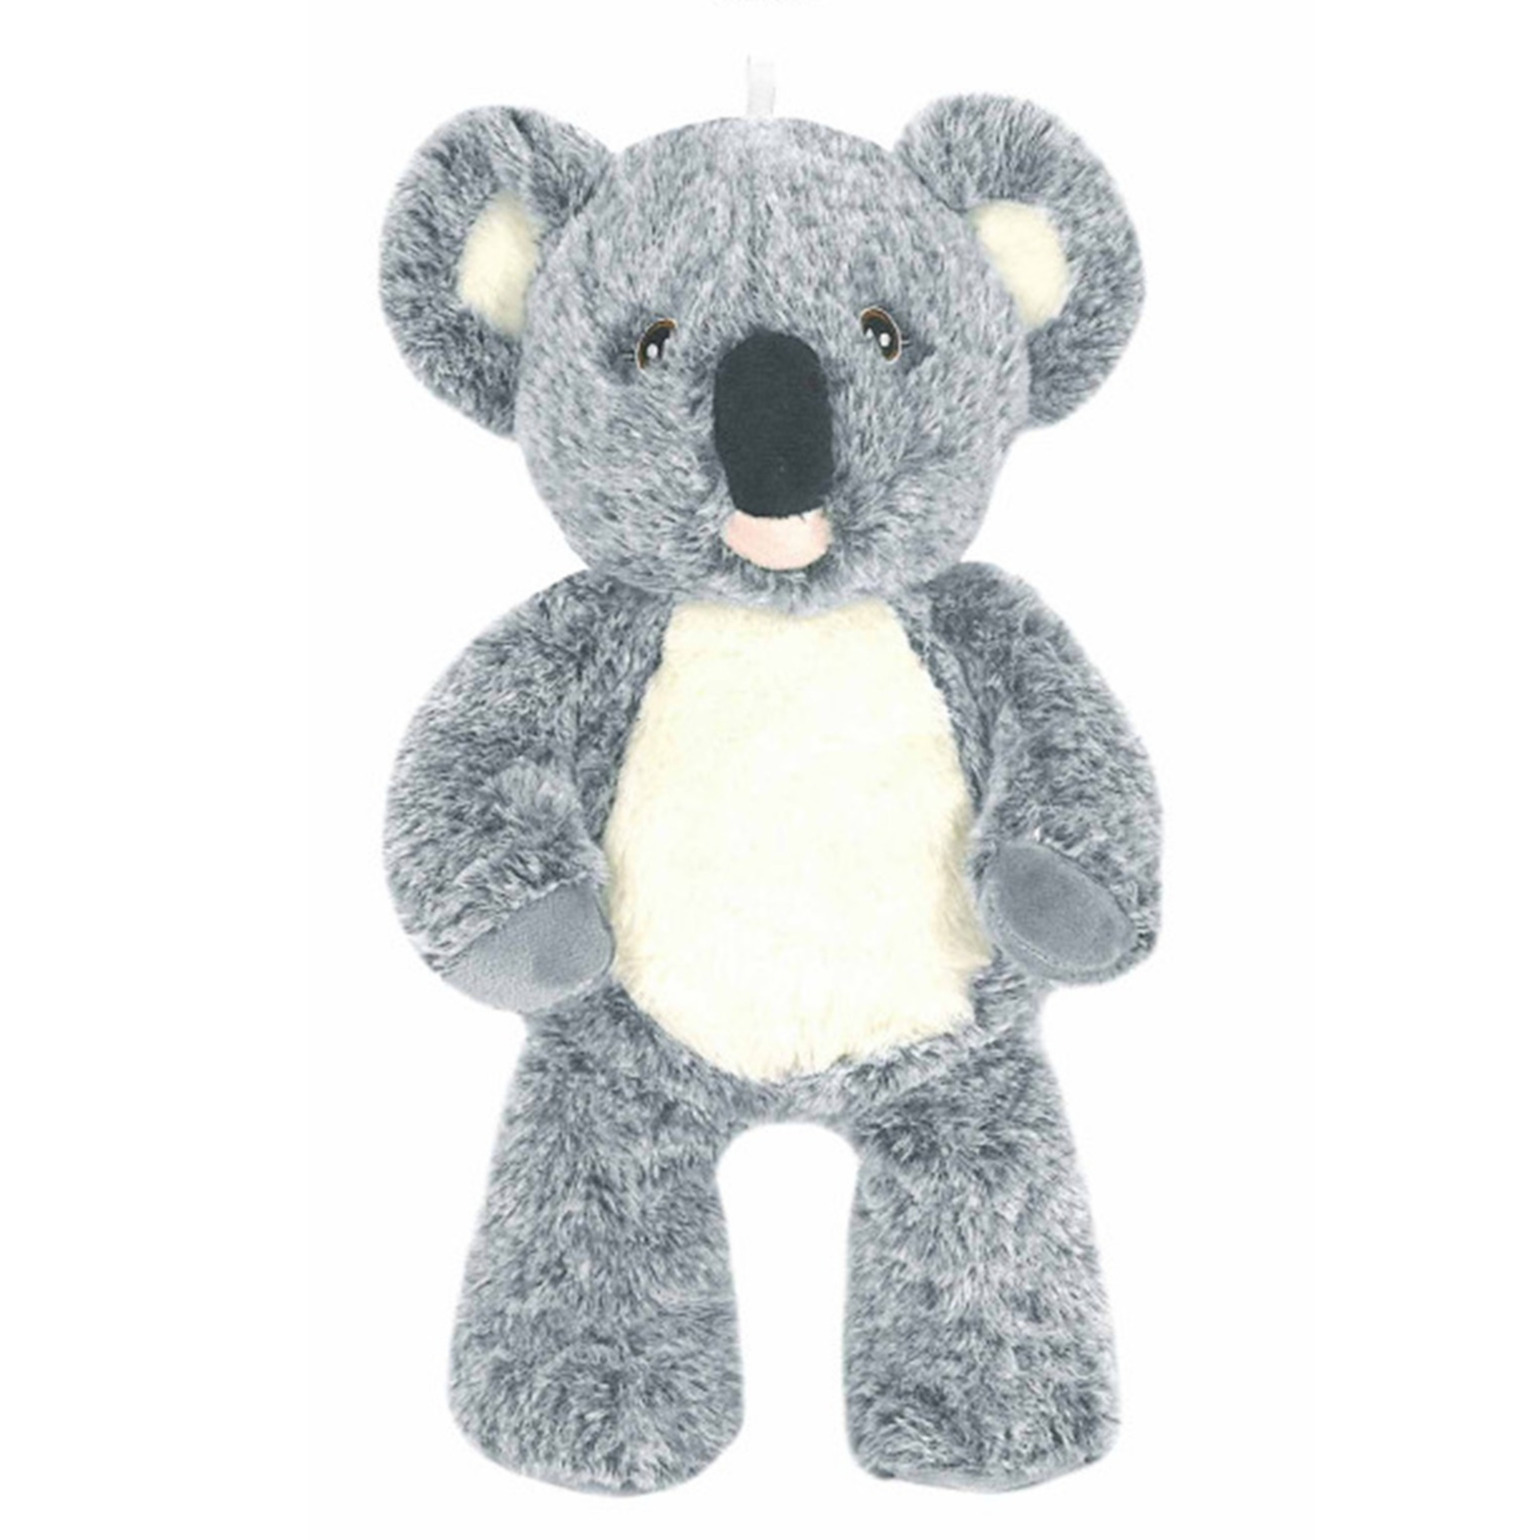 Knuffeldier Koala Aussie zachte pluche stof dieren knuffels grijs 25 cm